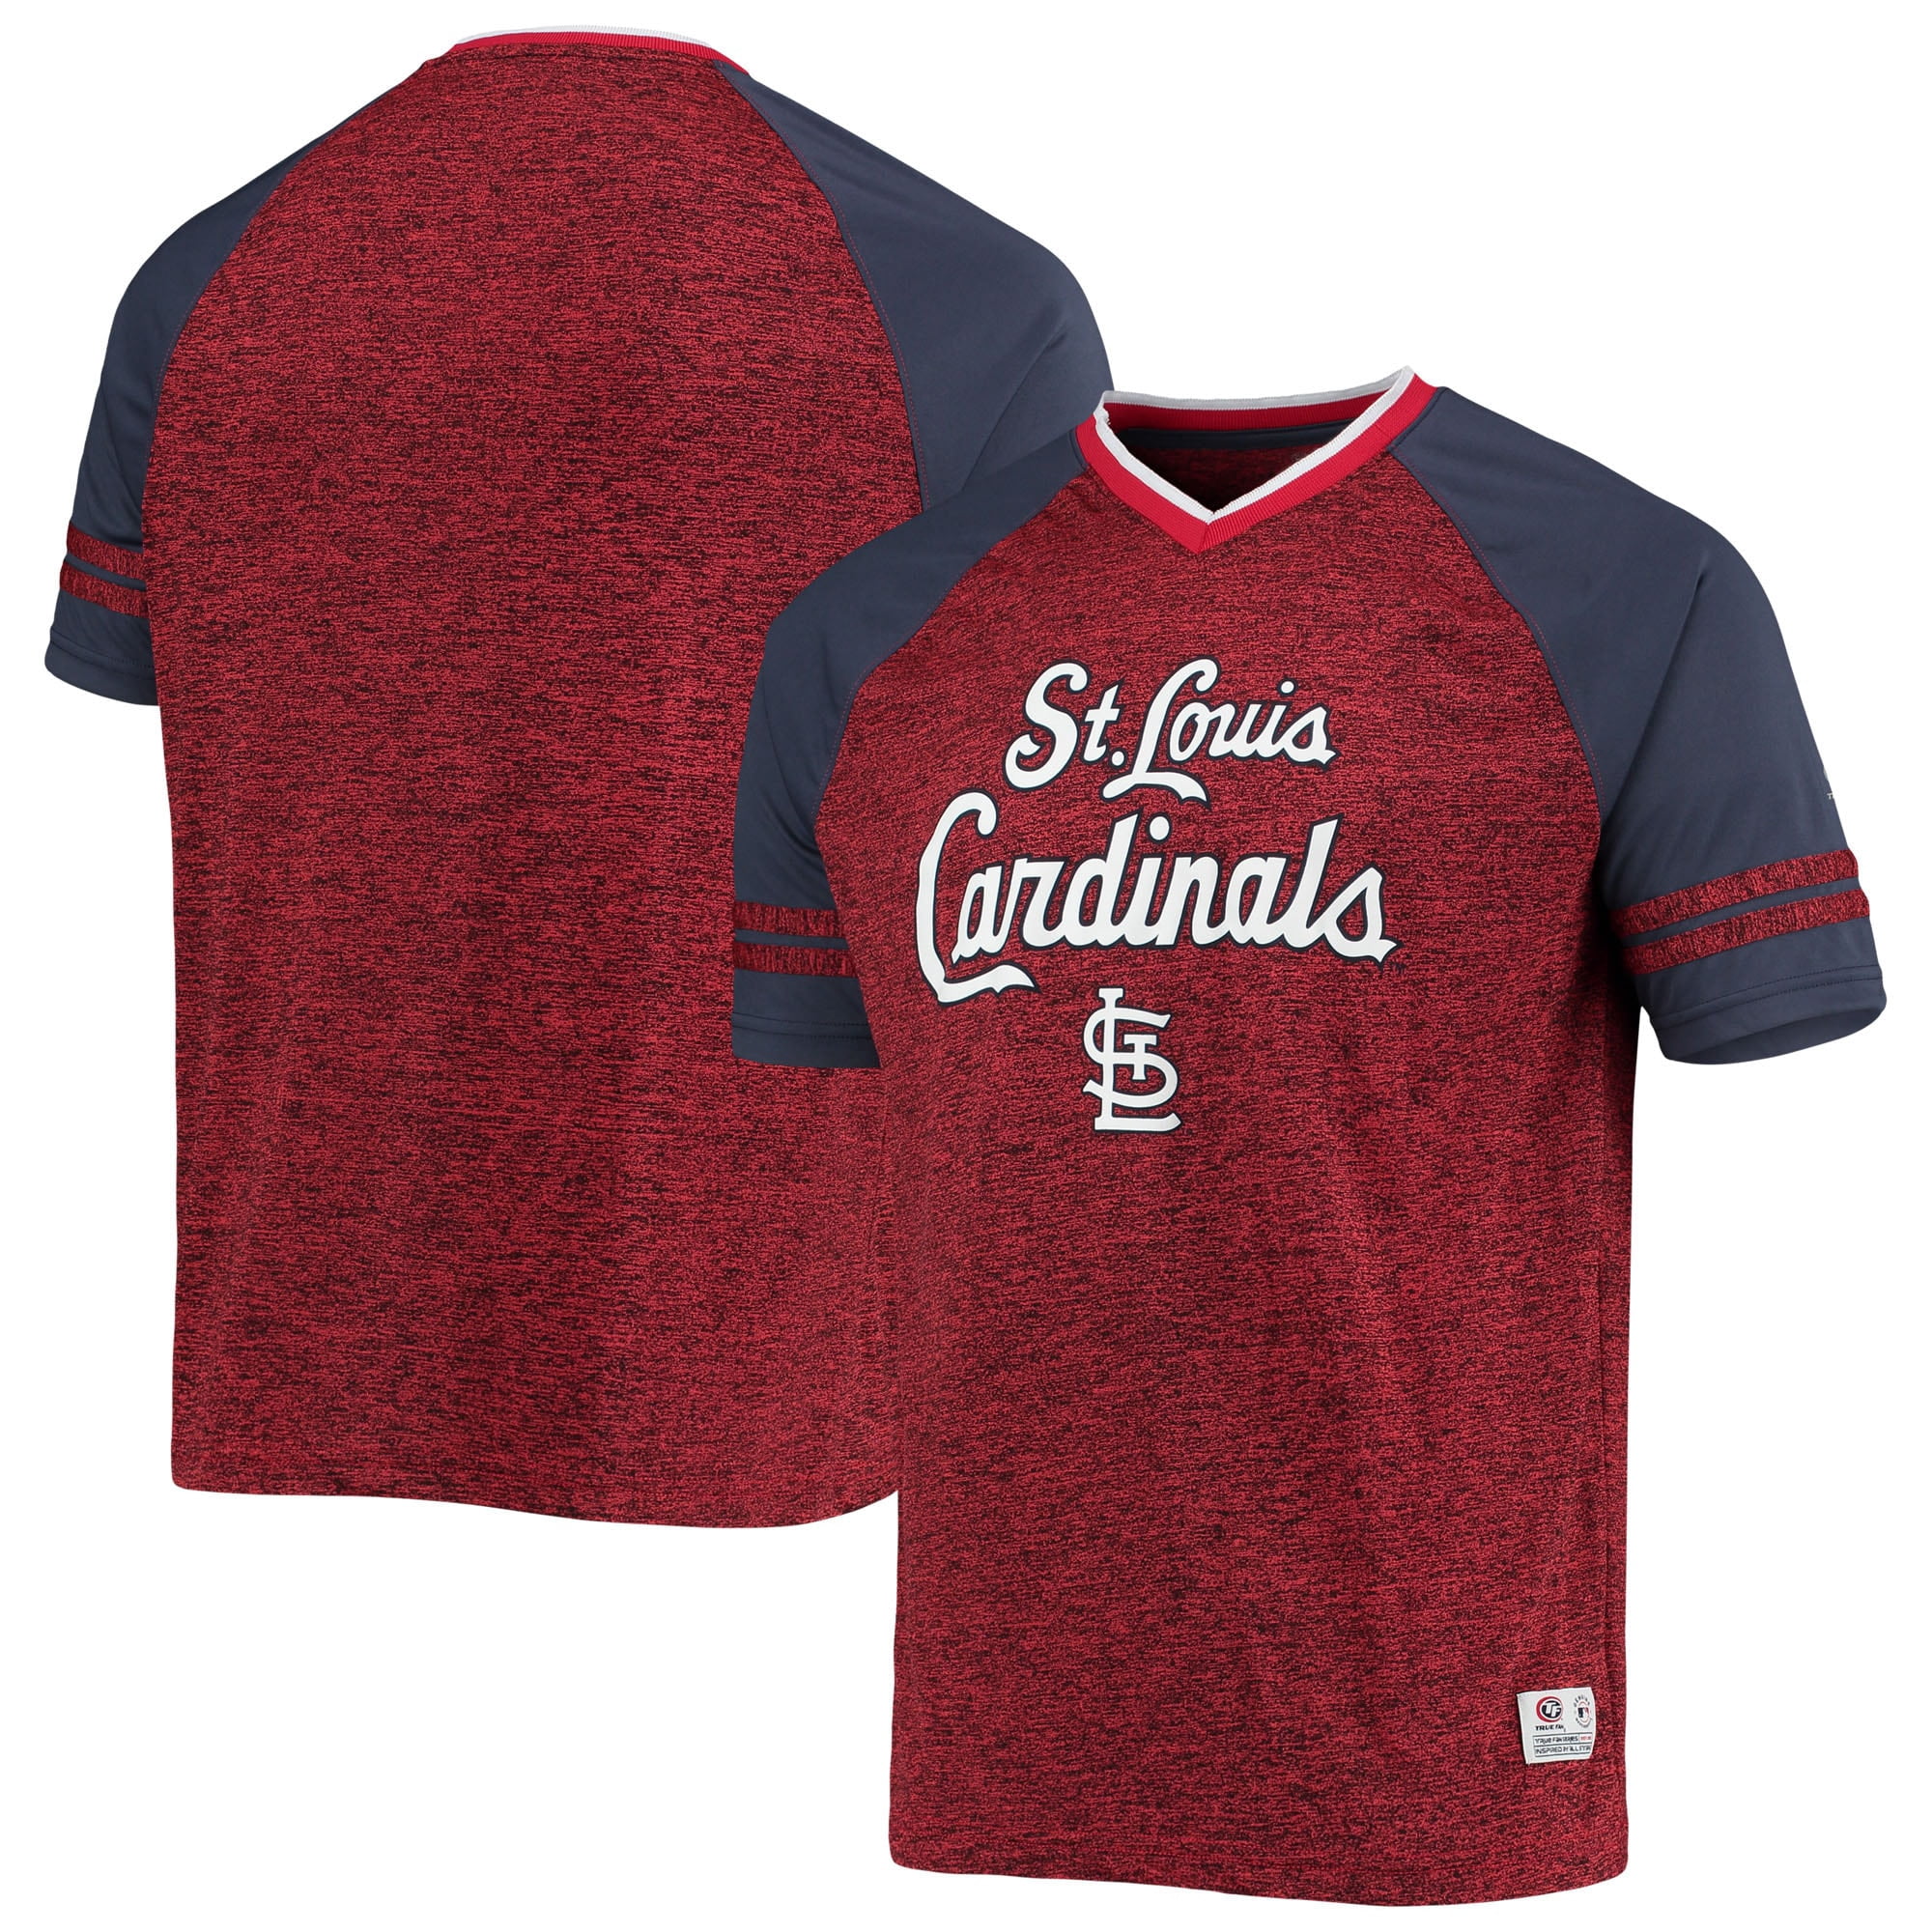 st louis cardinals sports wear